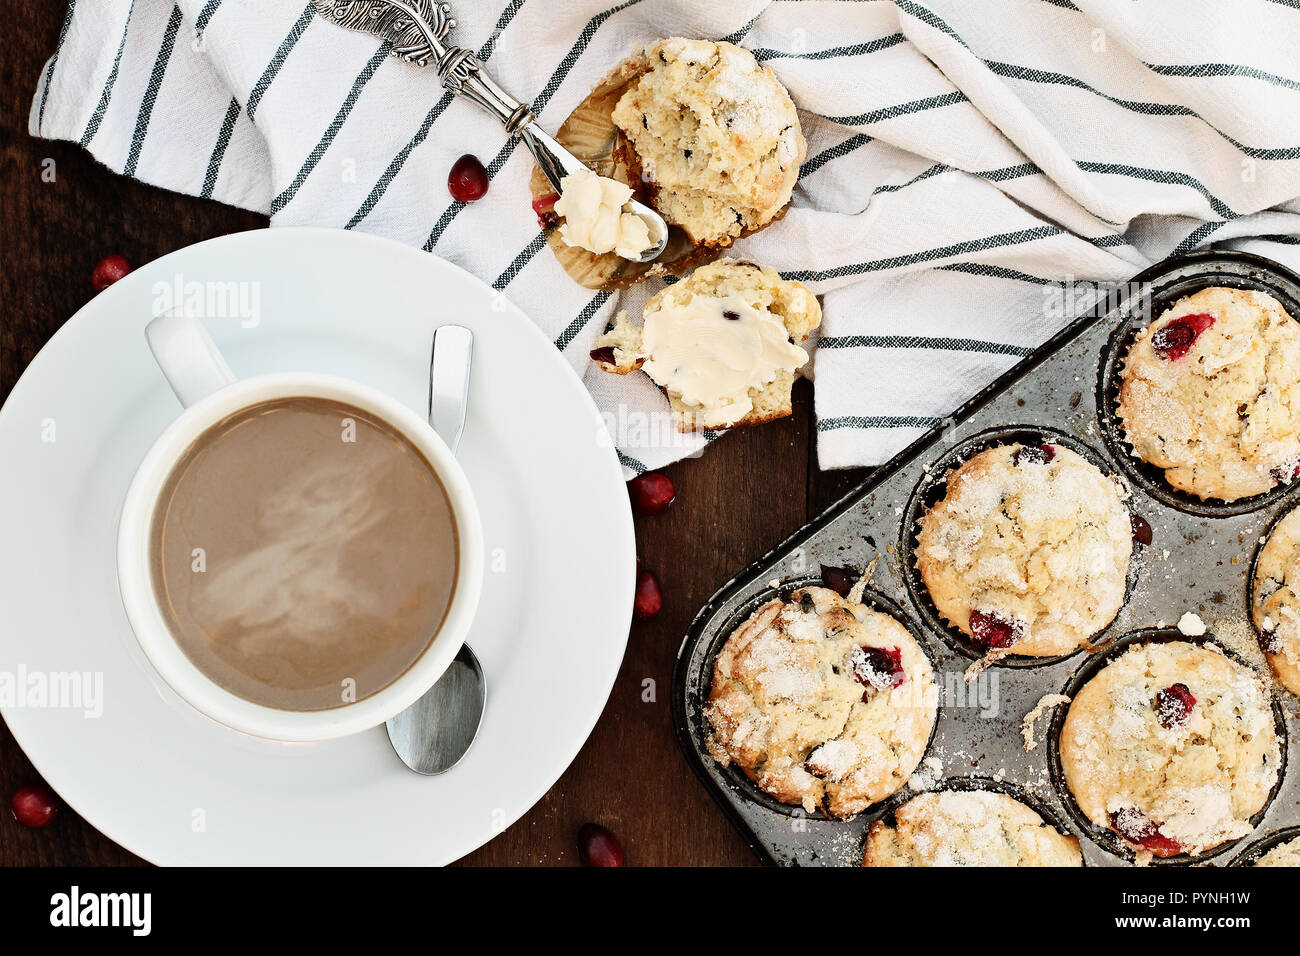 Caffè e muffin ai mirtilli. Immagine ripresa dal di sopra. Foto Stock